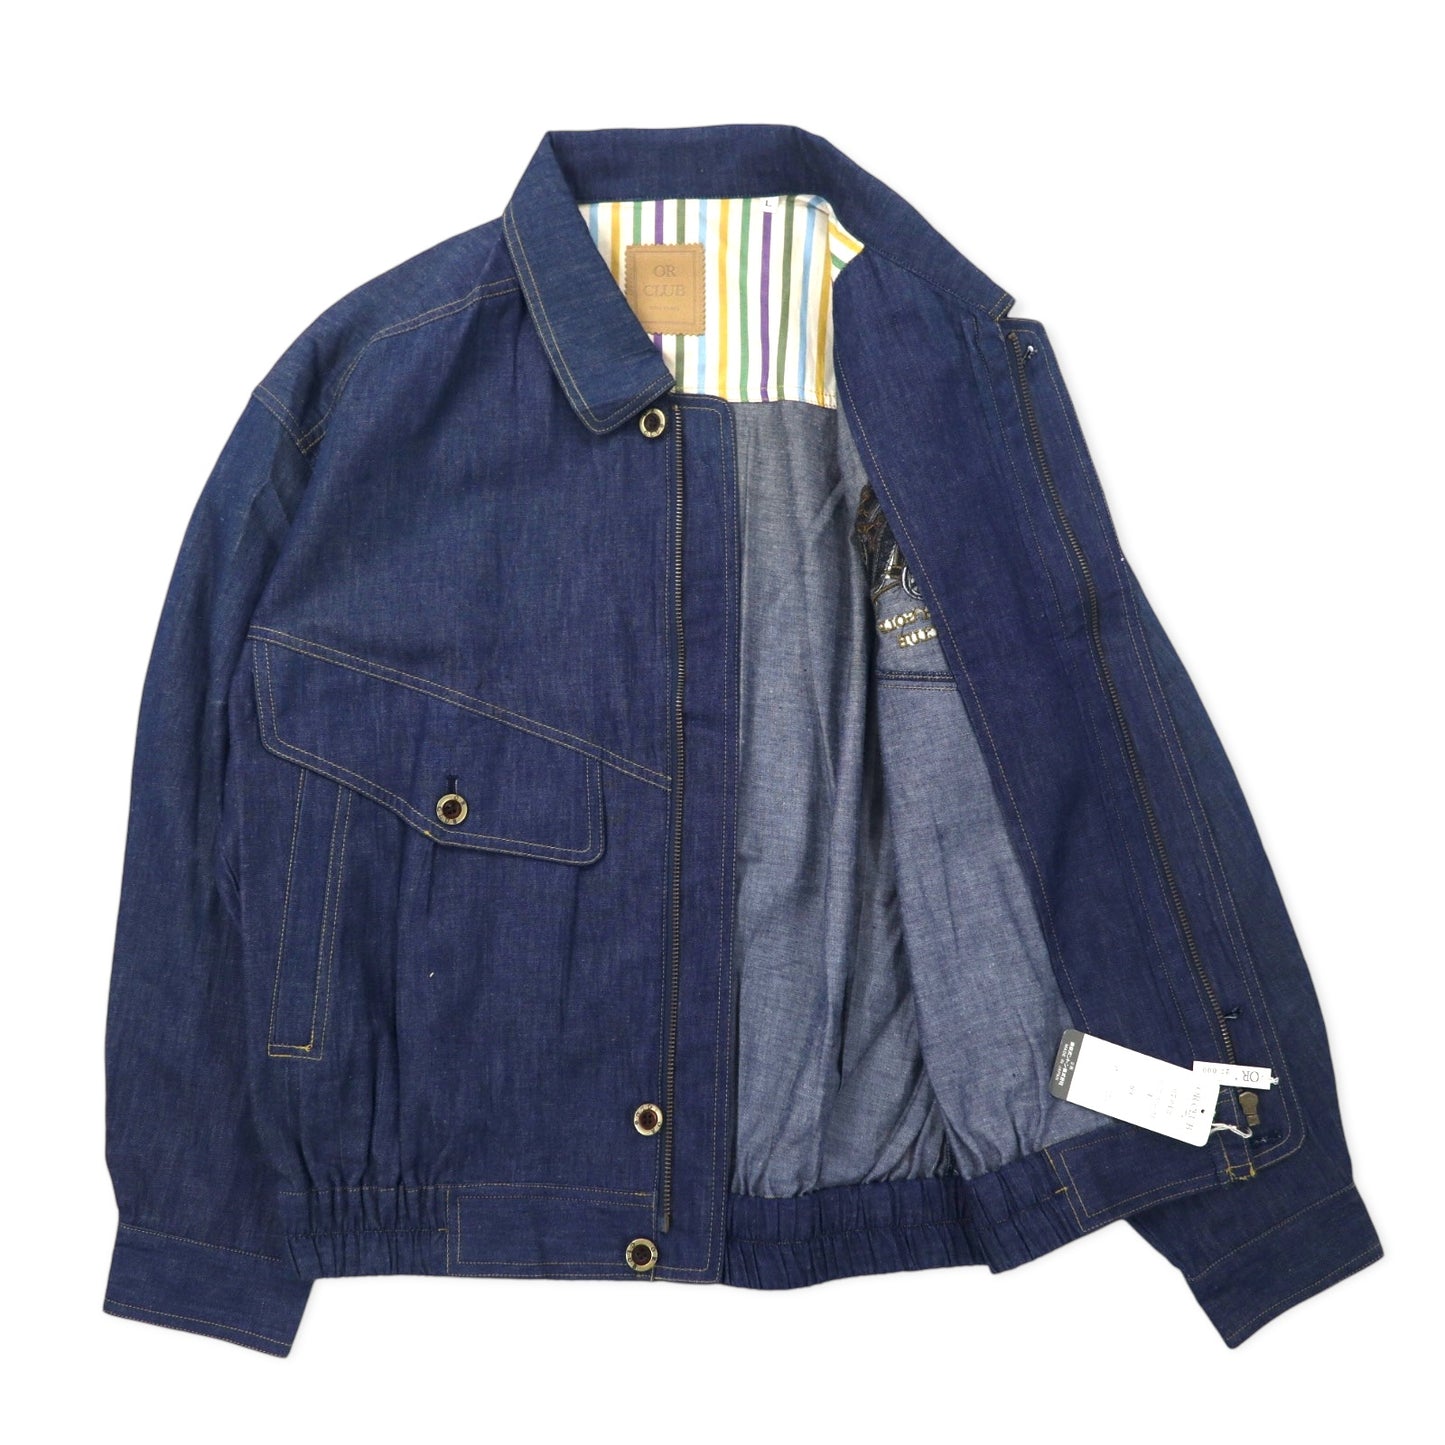 OR CLUB 80年代 デニム スウィングトップ ハリントンジャケット デニムジャケット L ブルー 濃紺 コットン レトロ 刺繍 日本製 未使用品